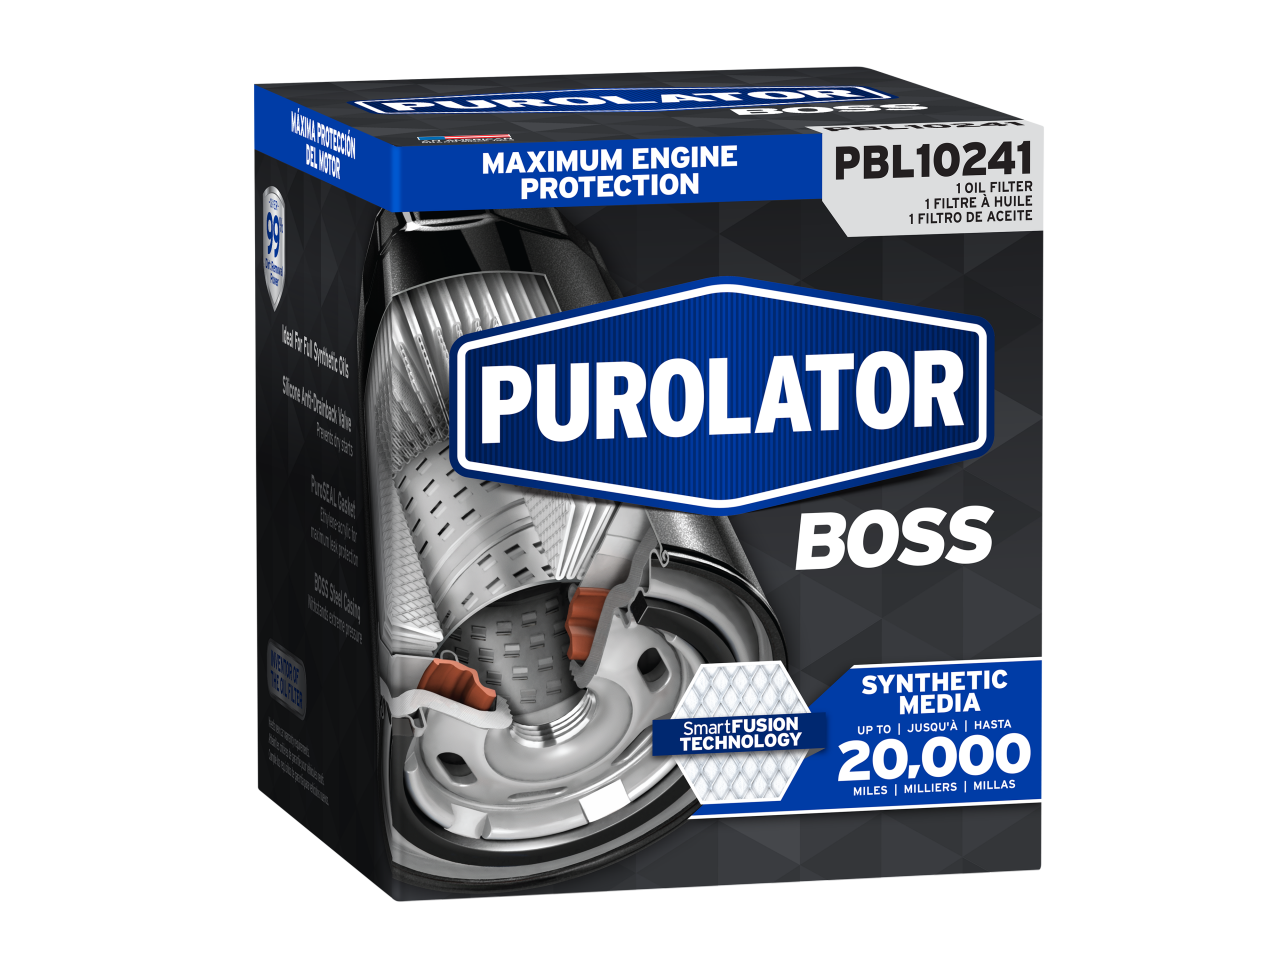 PurolatorBOSS Premium Oil Filters deliver maximum engine protection for up to 15,000 miles.